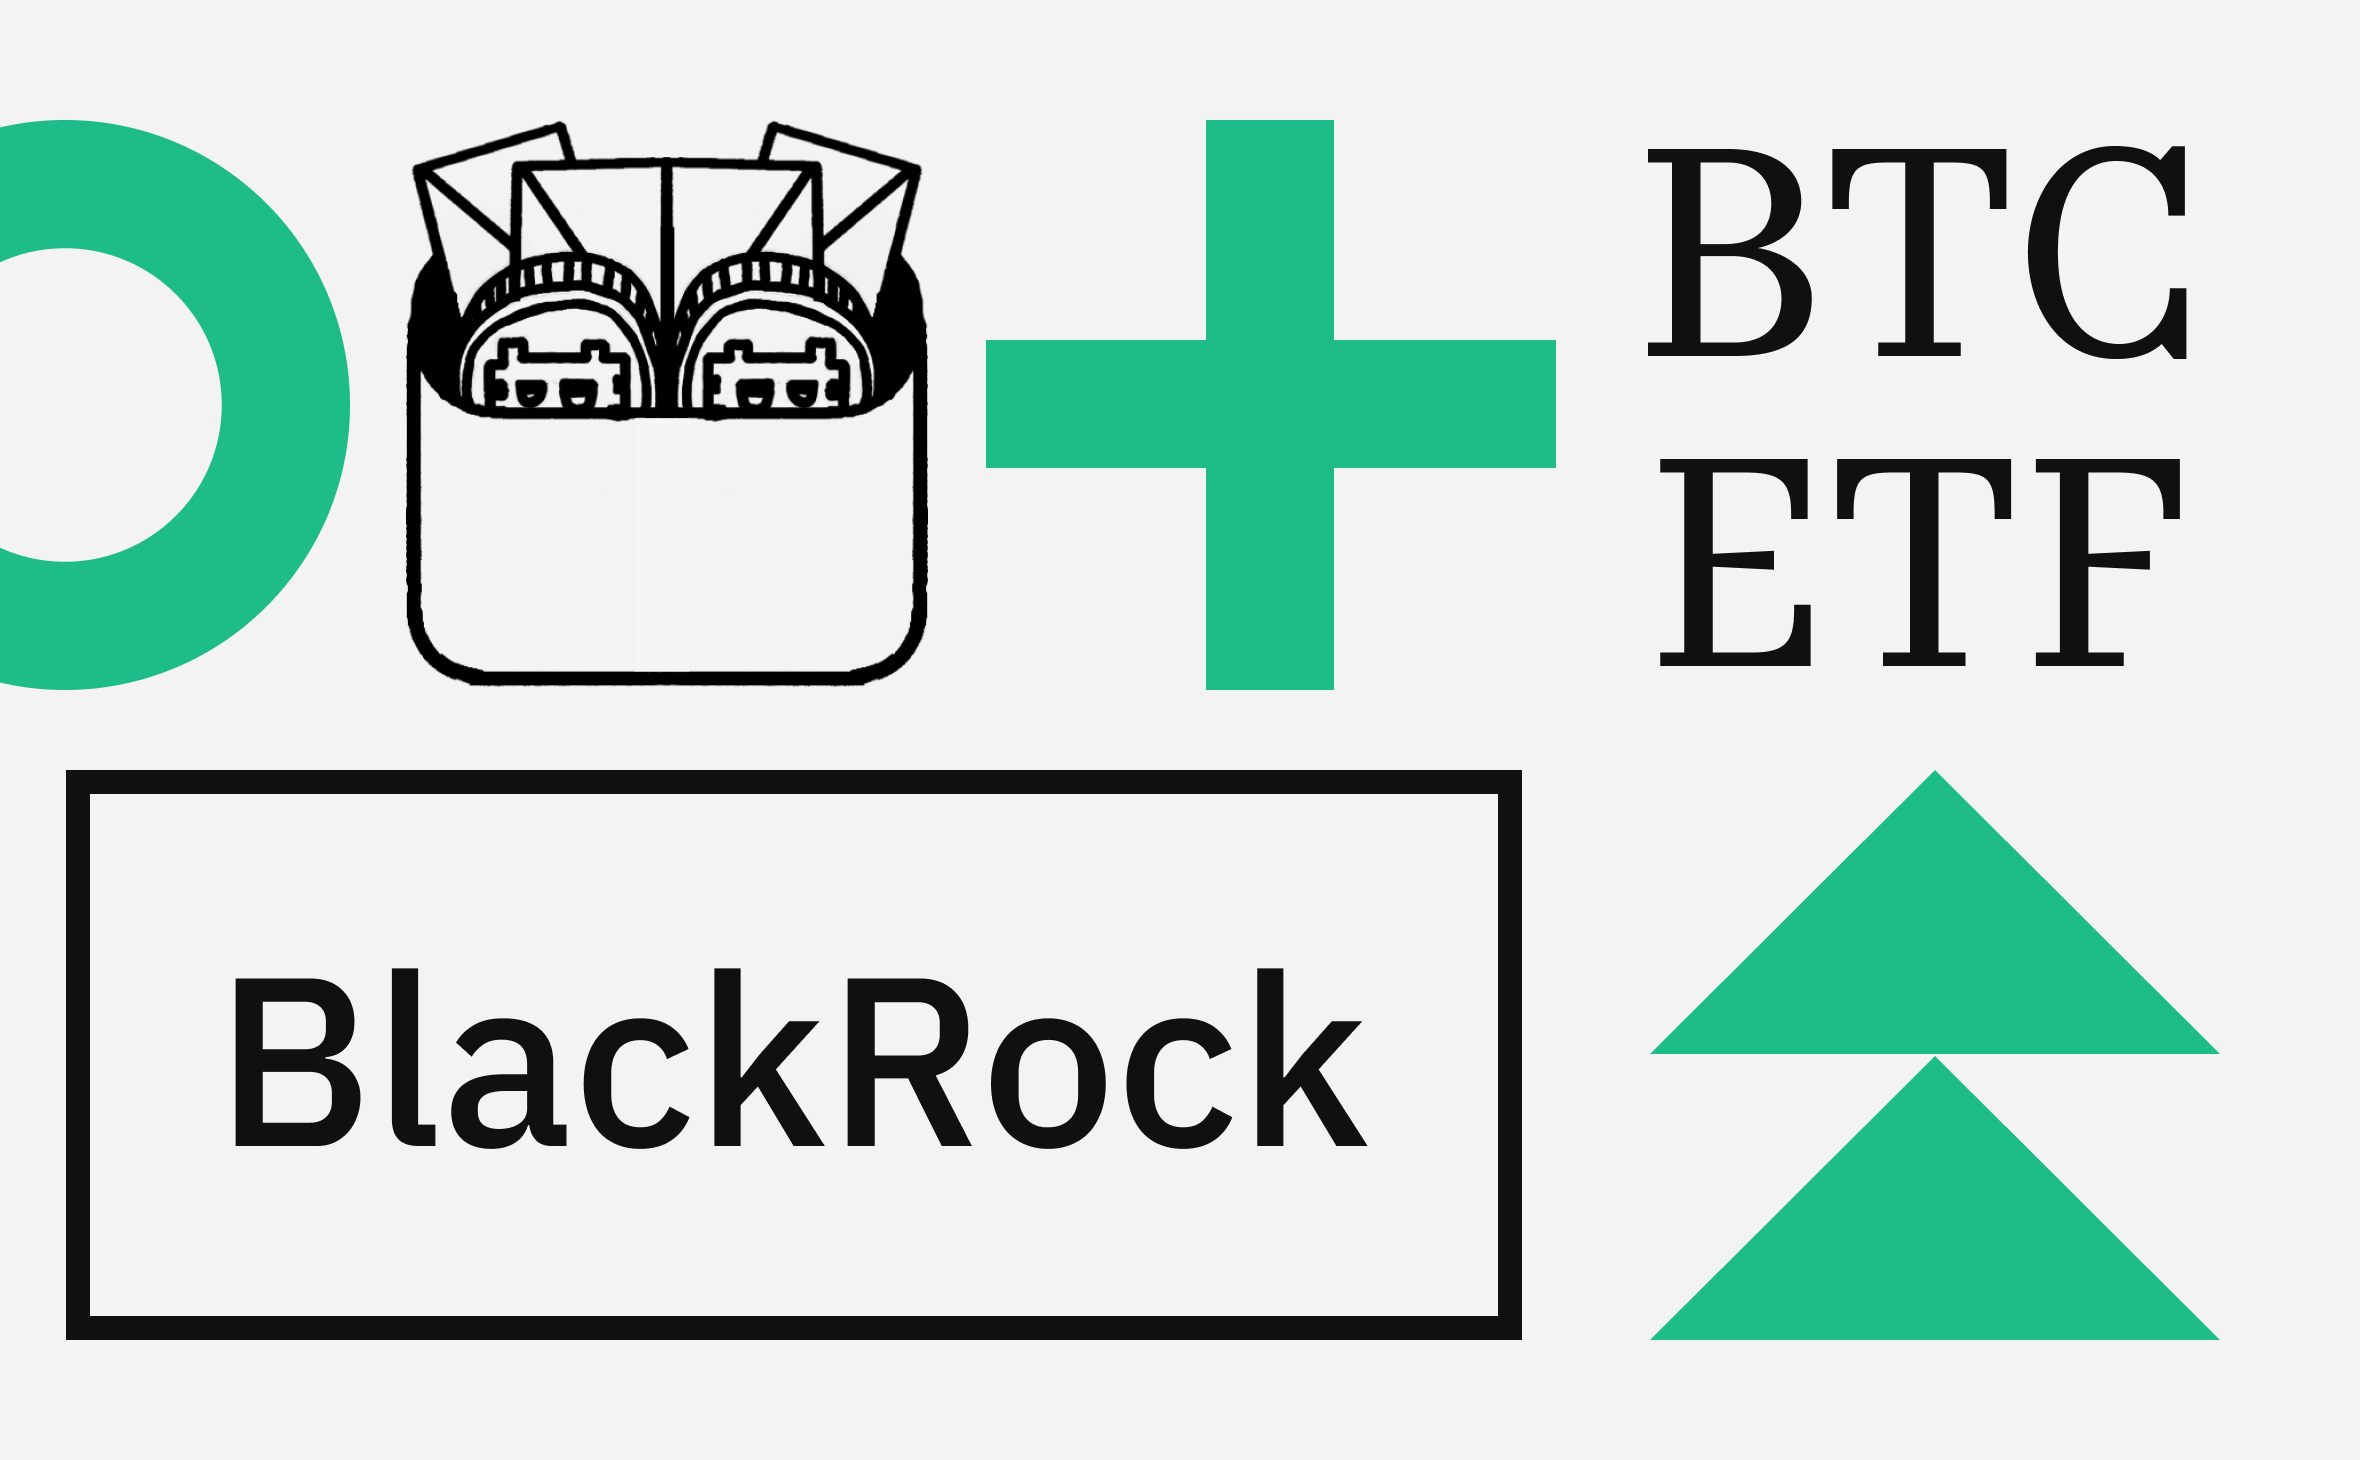 ETF от BlackRock с активами на $20 млрд стал крупнейшим из биткоин-фондов